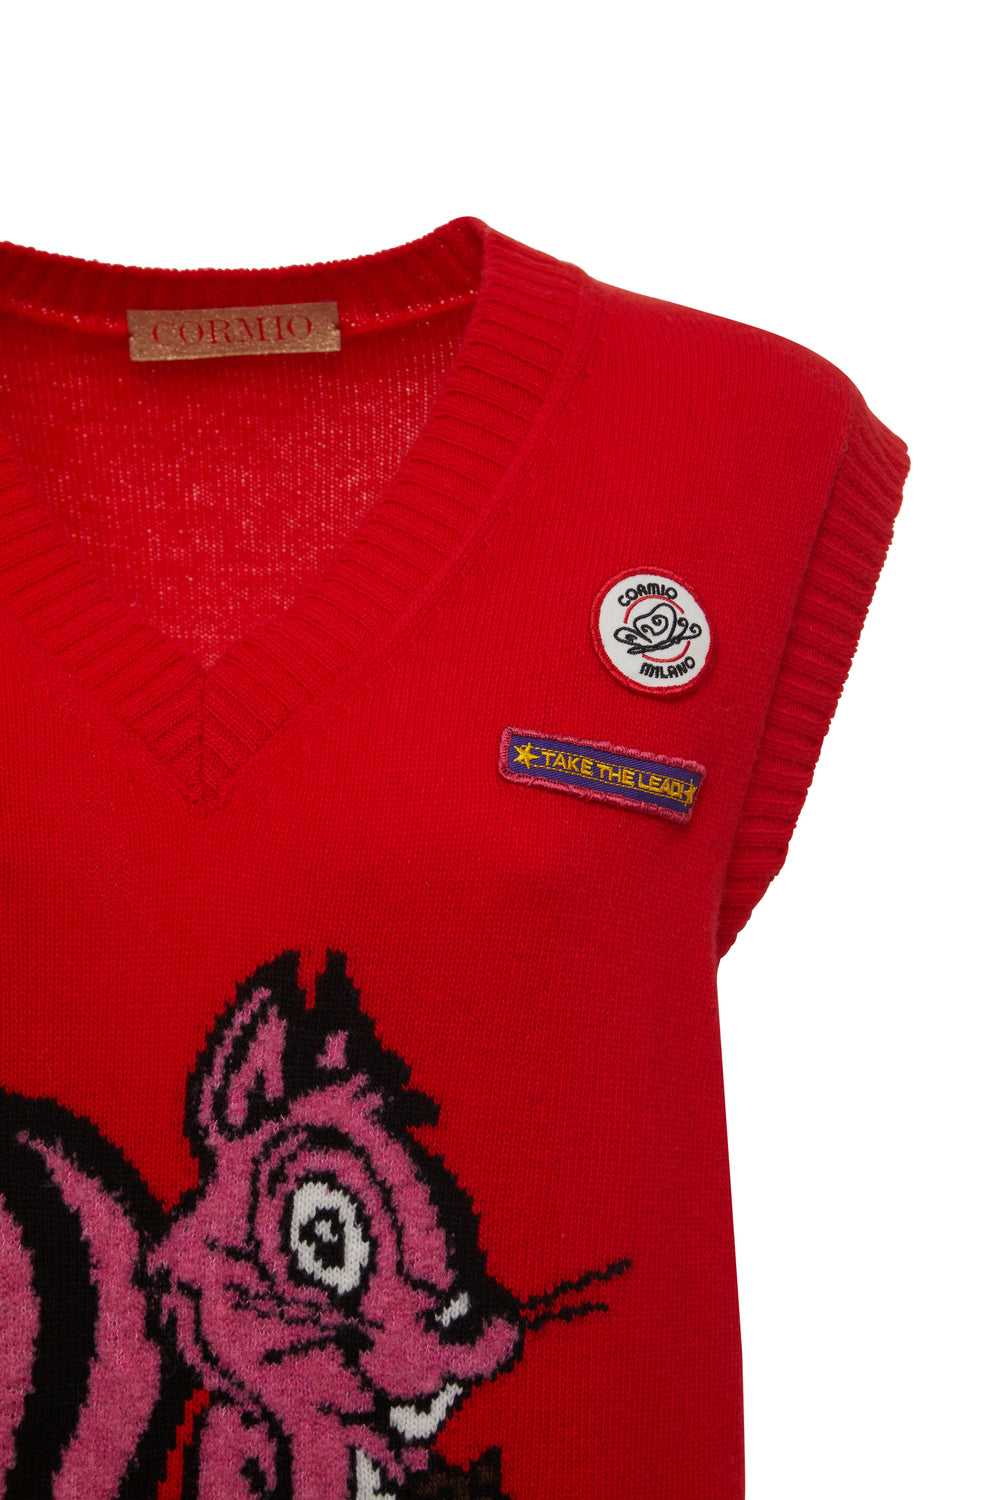 product-color-Nicole wool vest